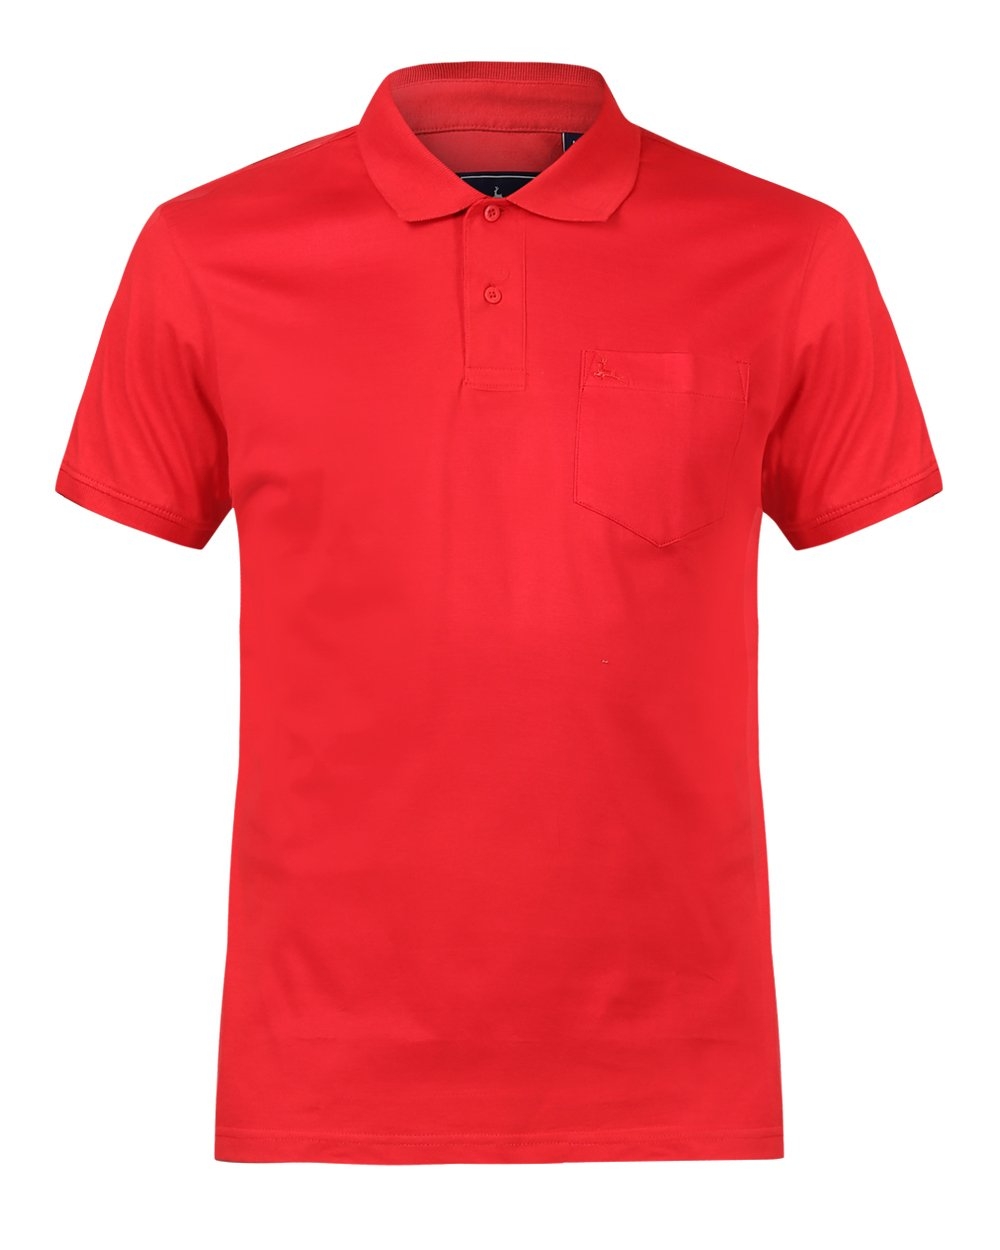 PARX | Parx Medium Red T-Shirt